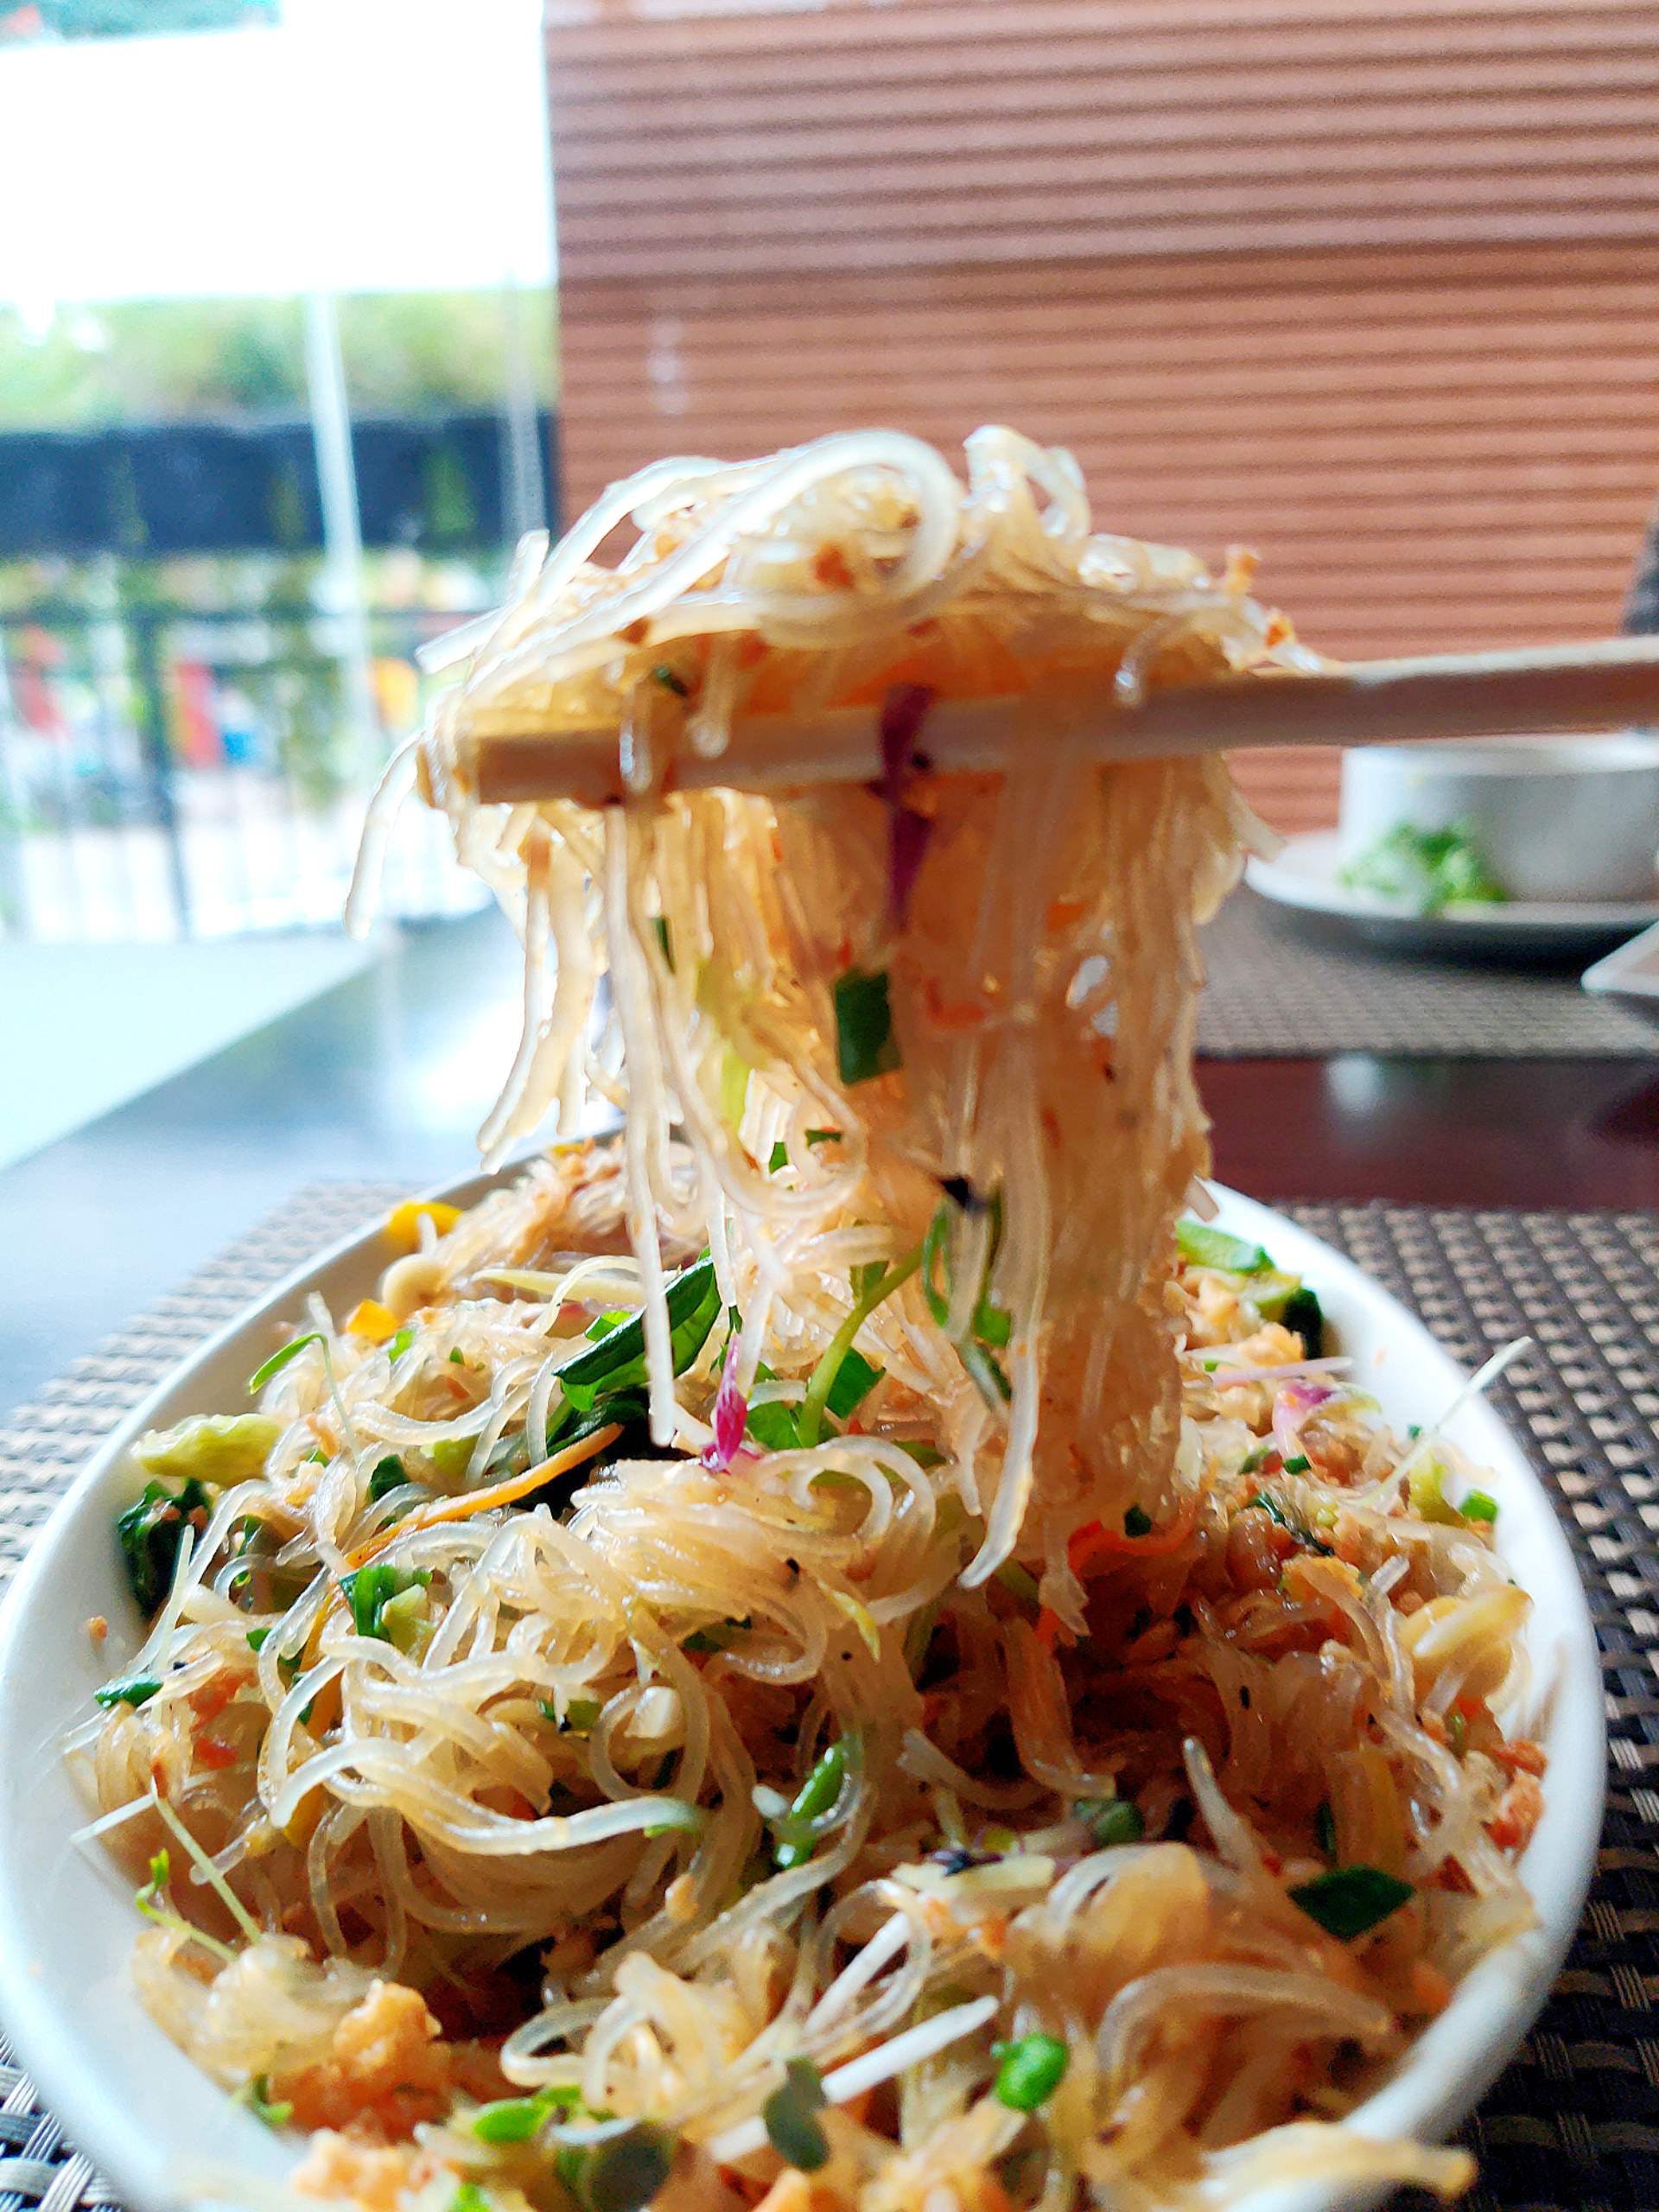 Dish,Food,Cuisine,Pad thai,Ingredient,Capellini,Rice noodles,Spaghetti,Noodle,Thai food